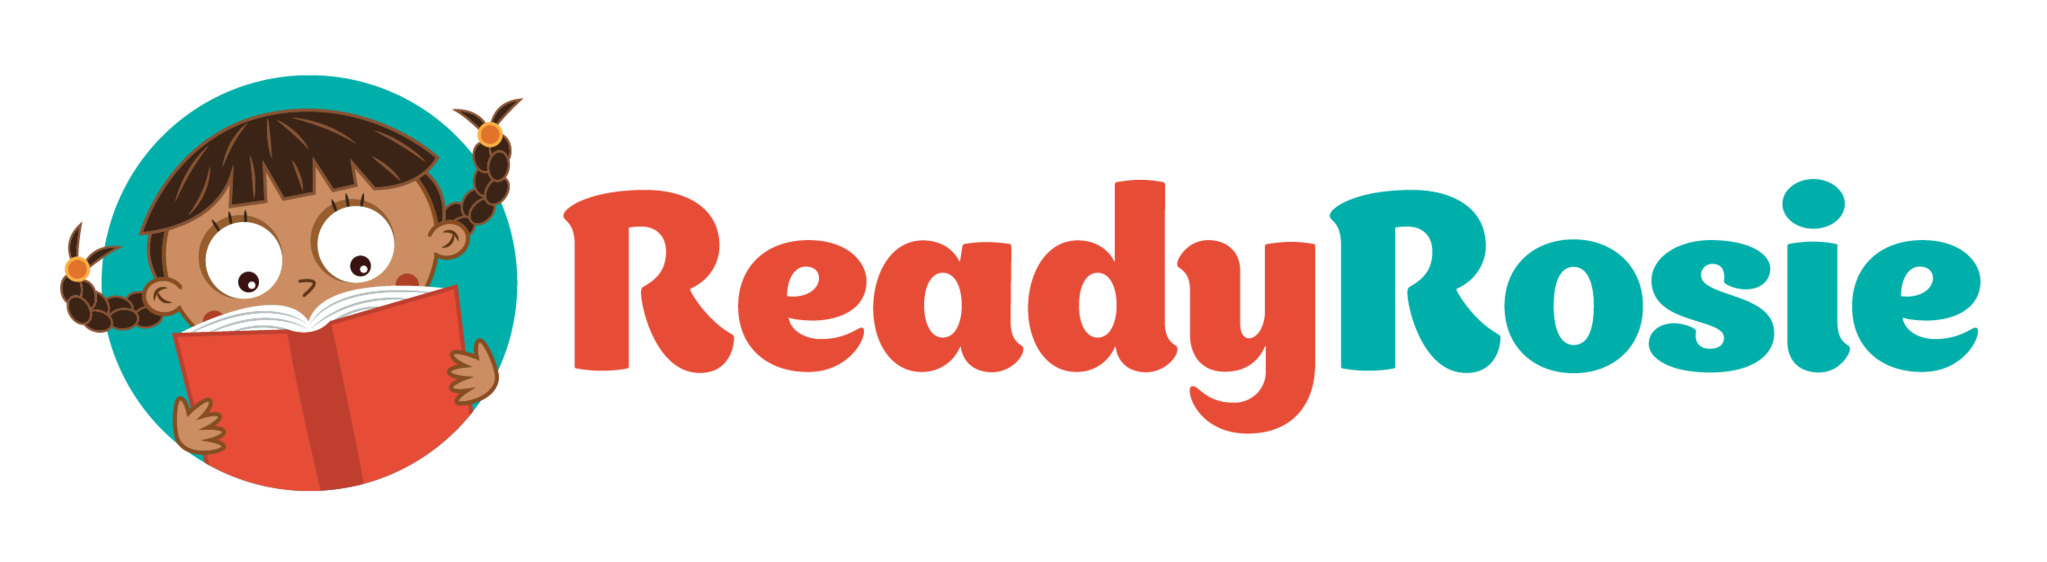 Ready Rosie Logo